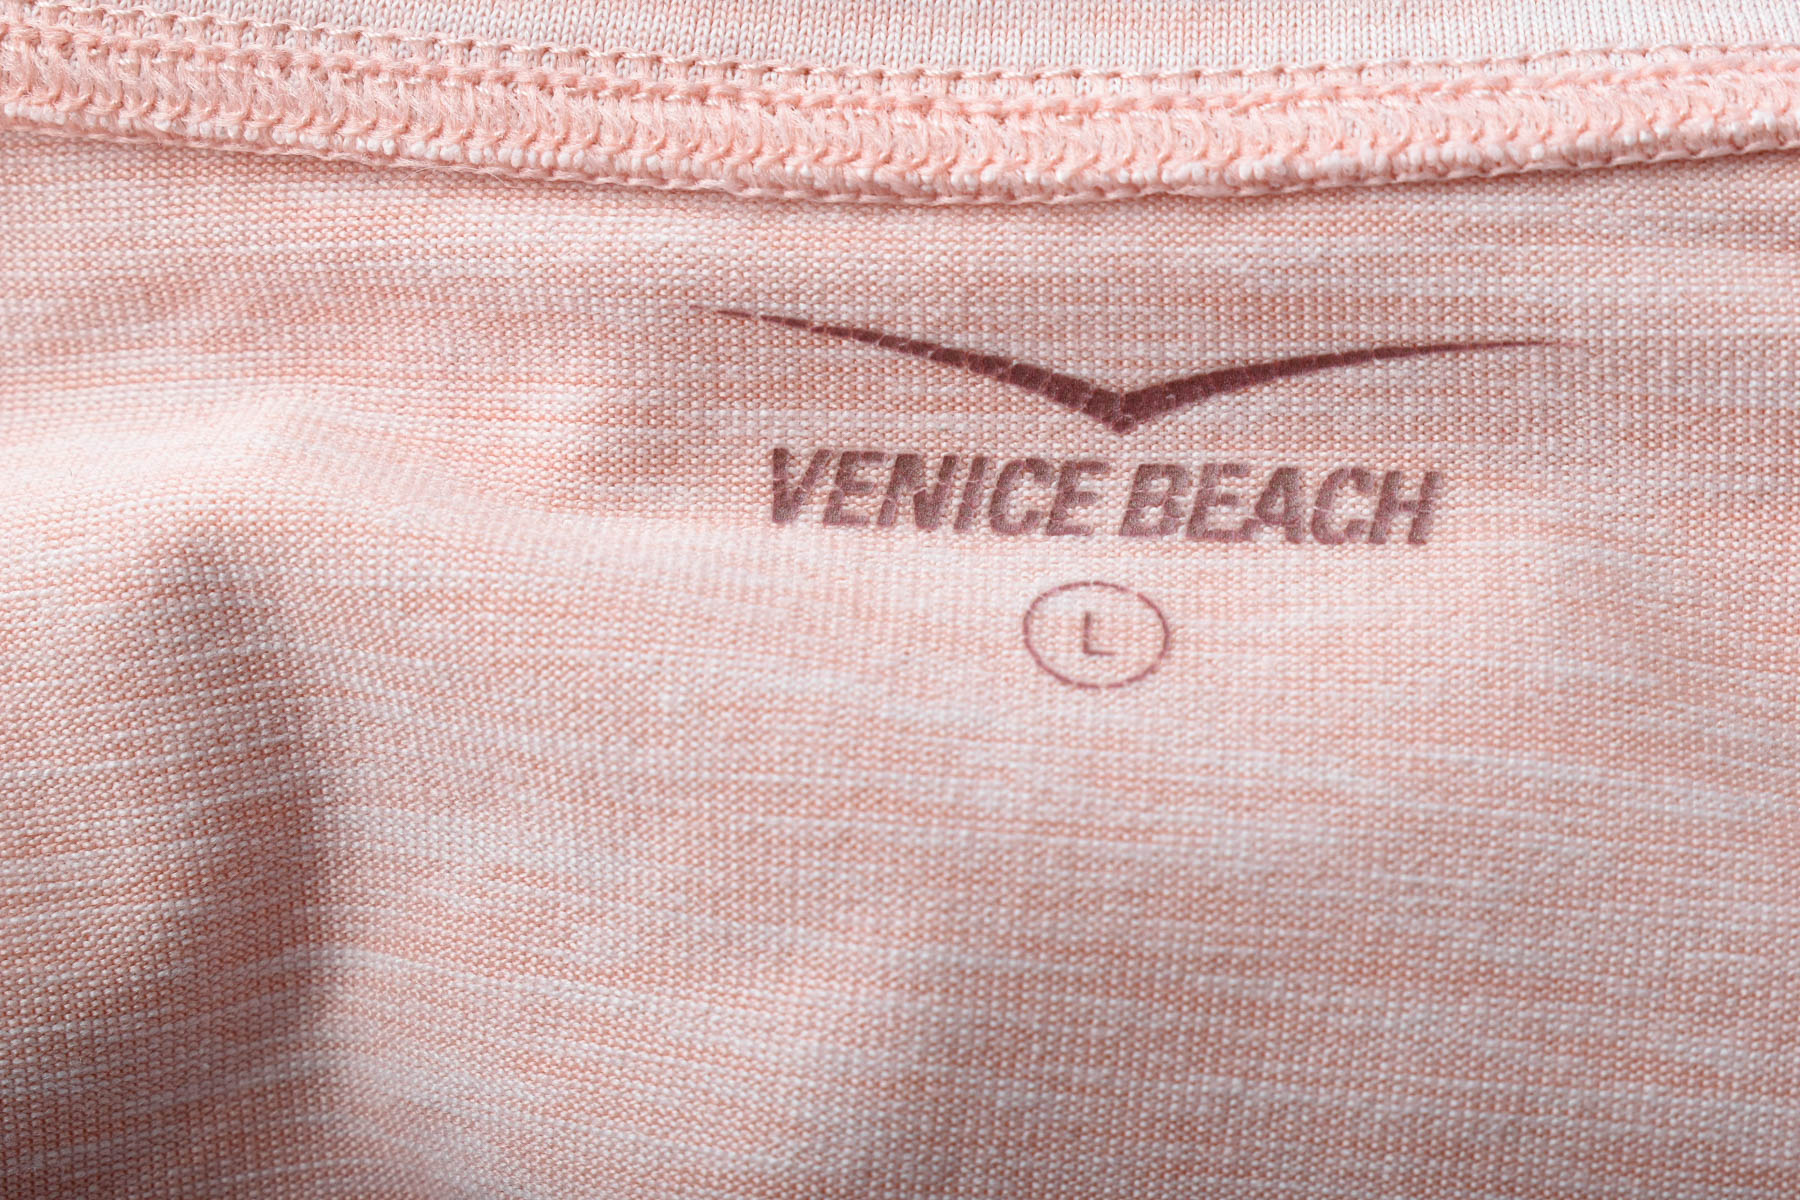 Дамска тениска - Venice Beach - 2